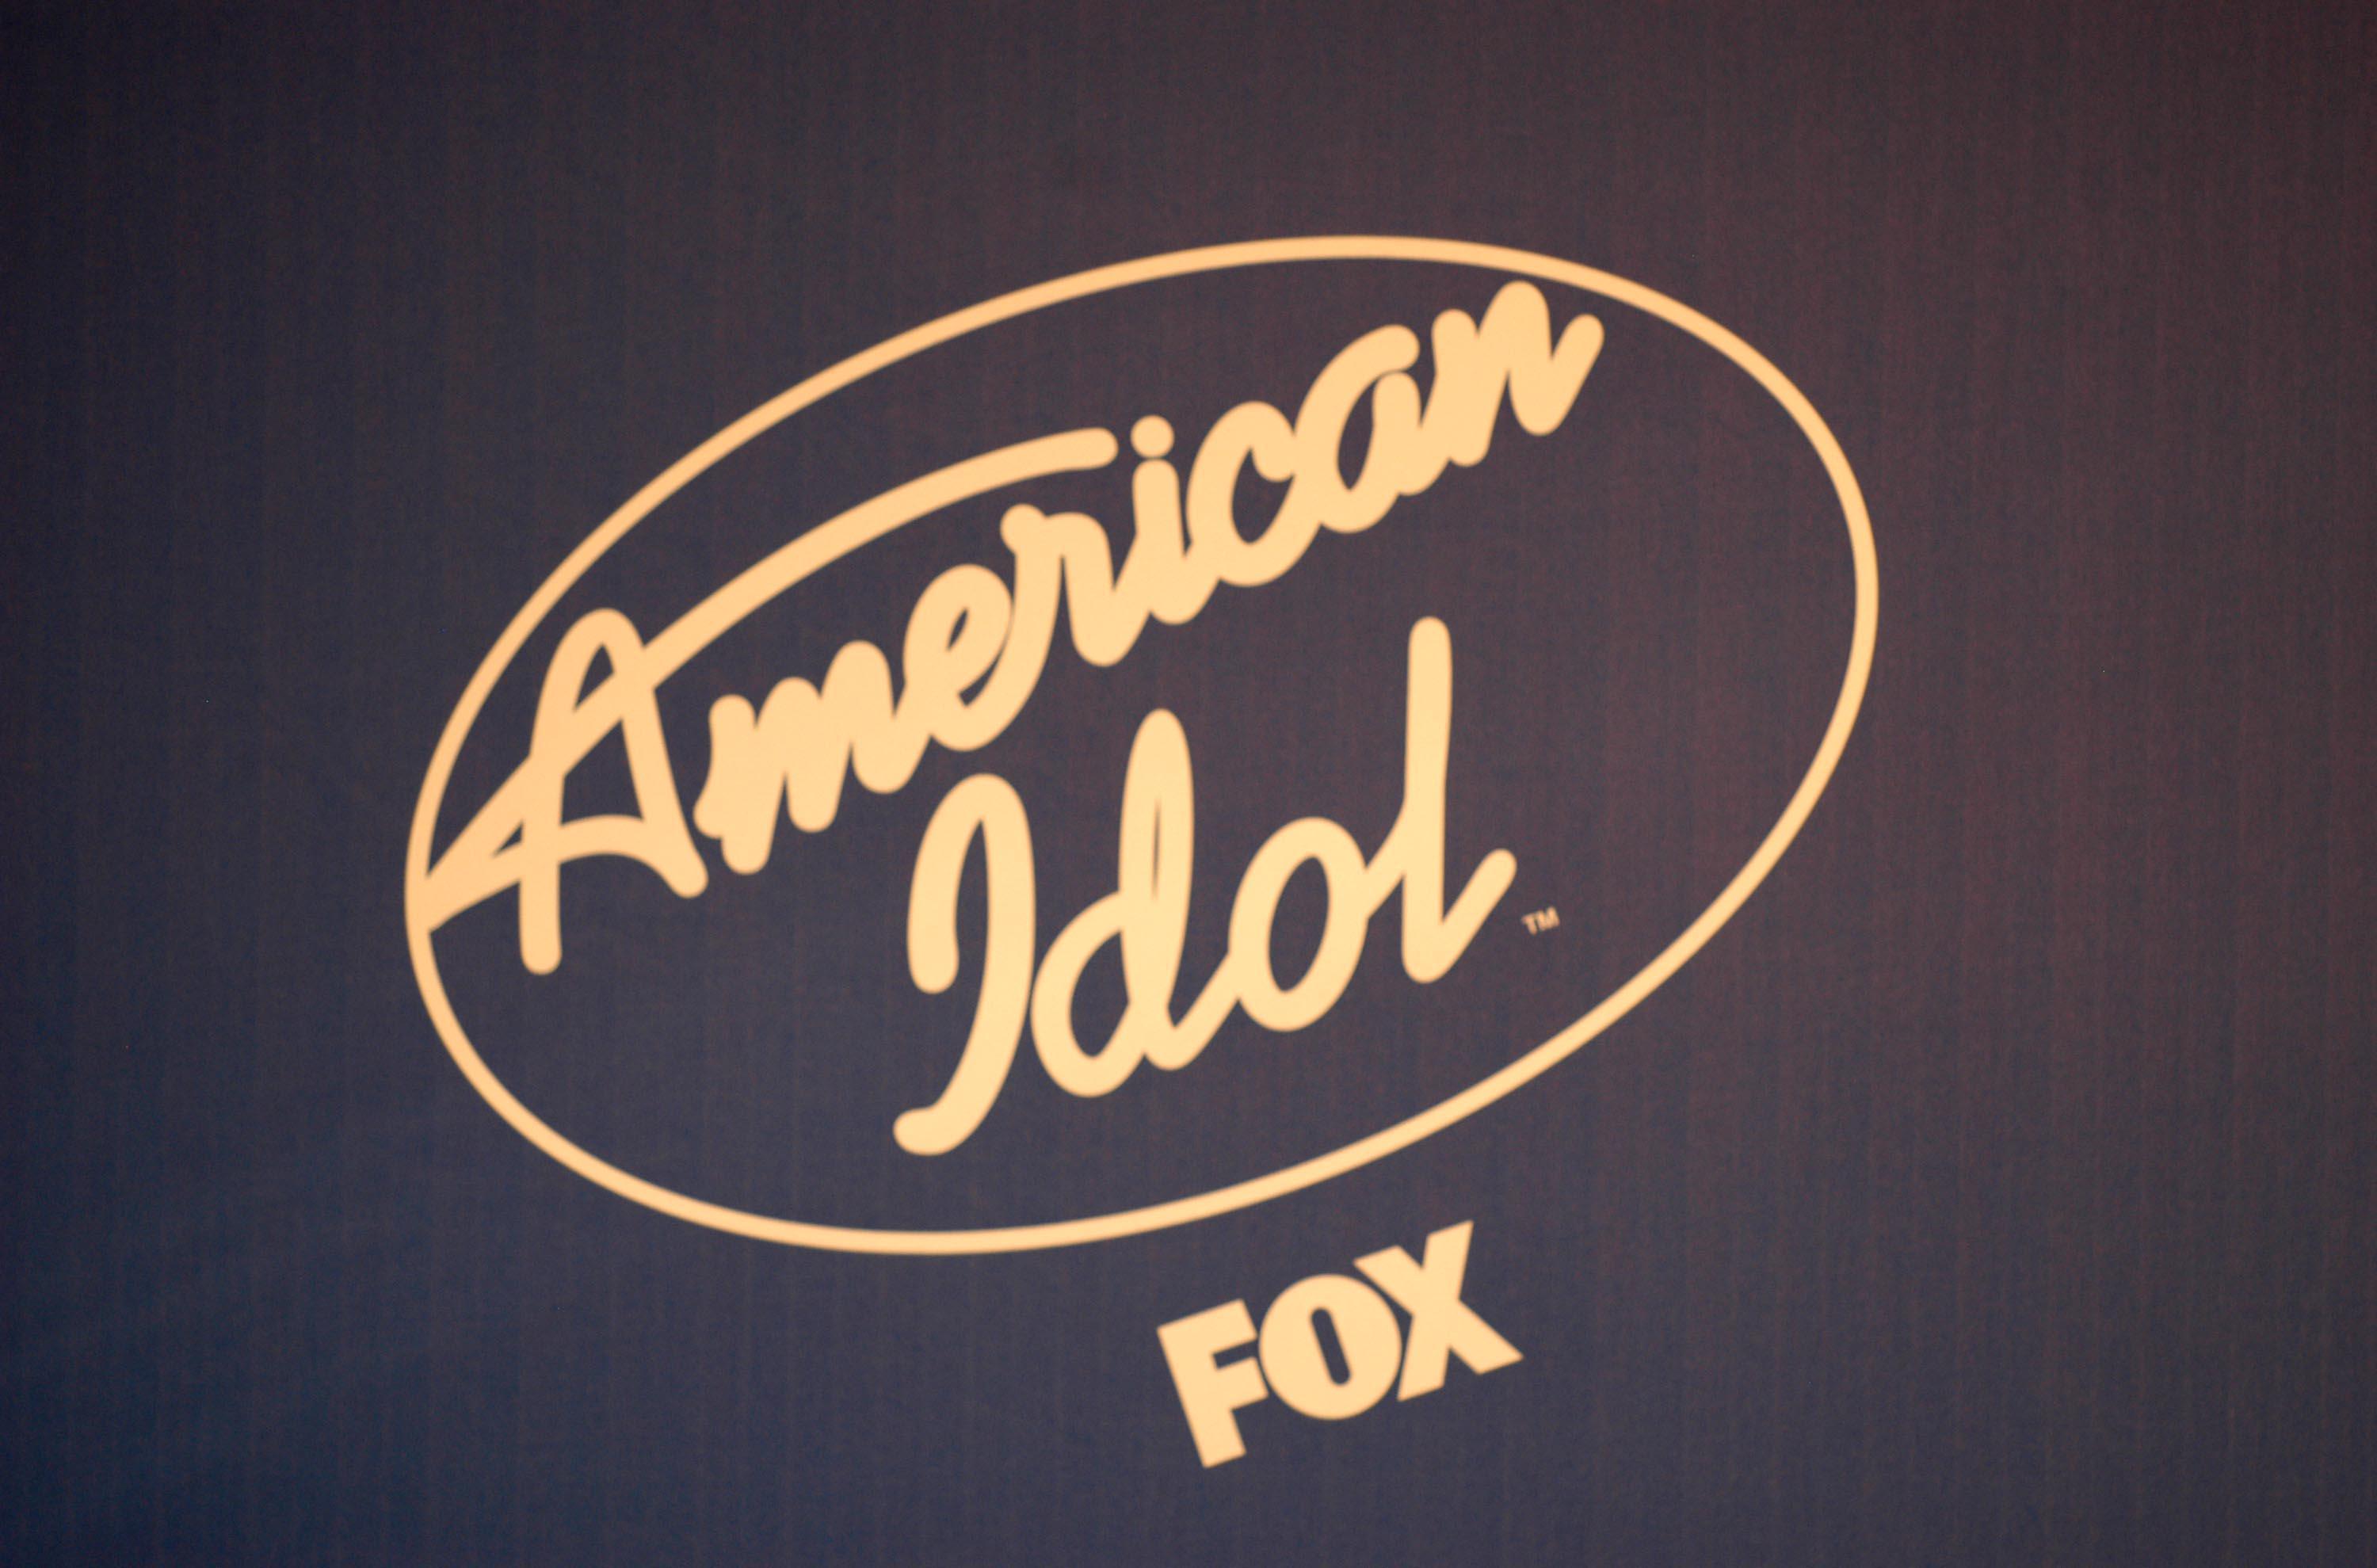 American Idol 2 Finals - Press Room